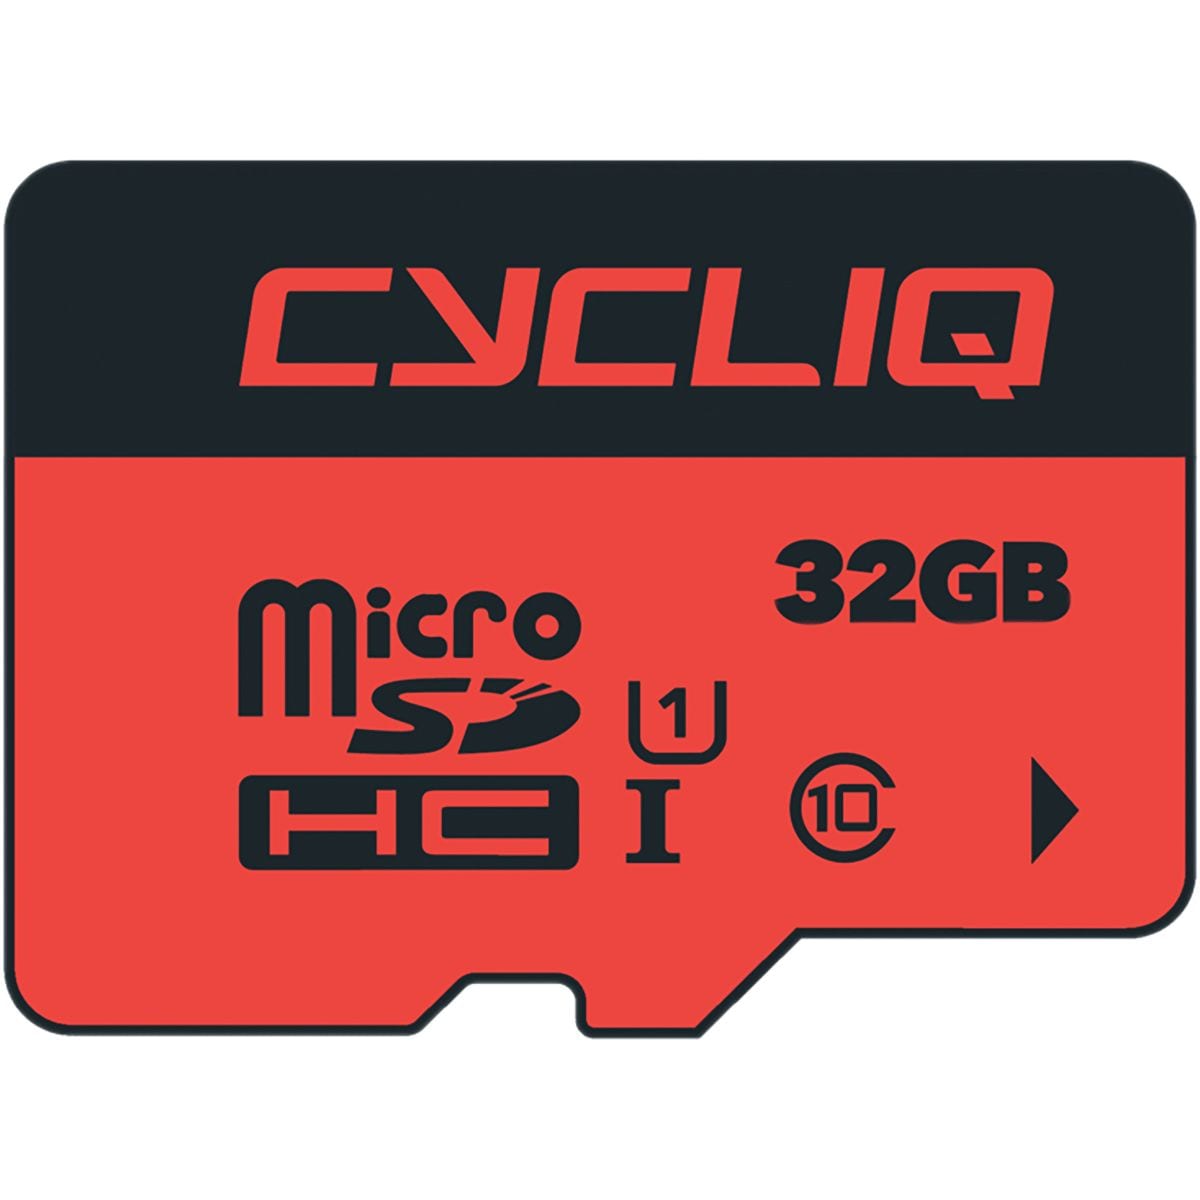 CYCLIQ MicroSD Card - 32GB